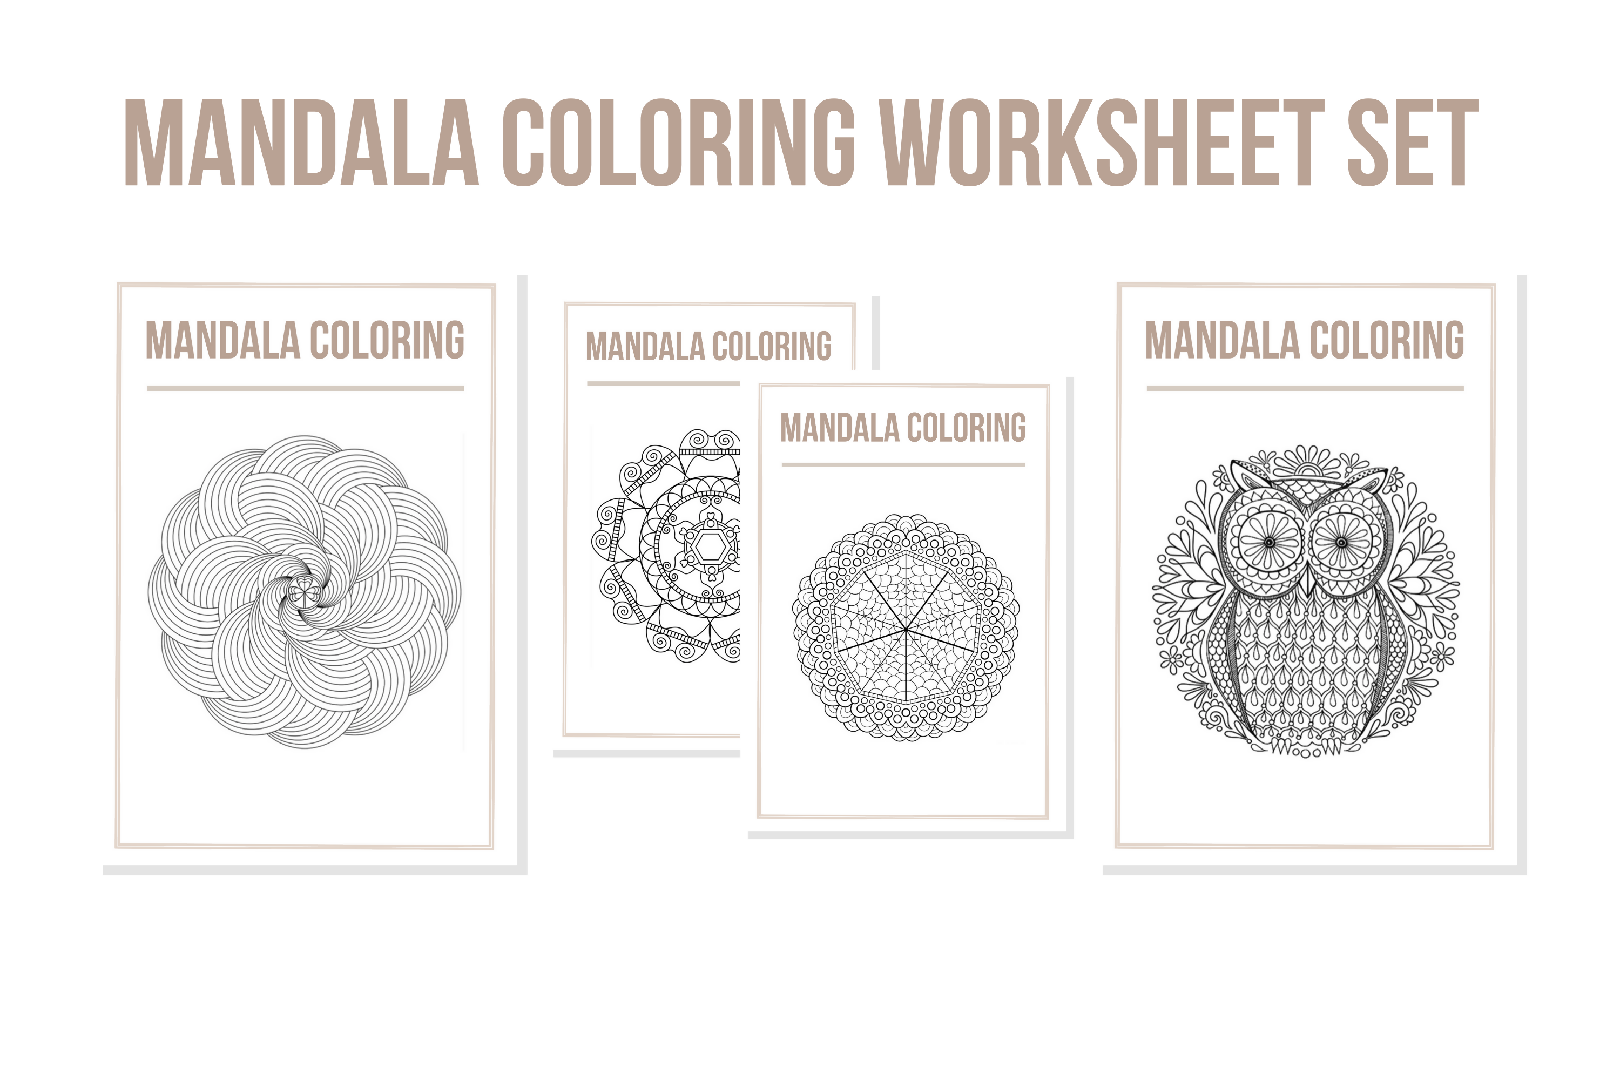 Mandala Adult Coloring Books Vol.3: Masterpiece Pattern and Design